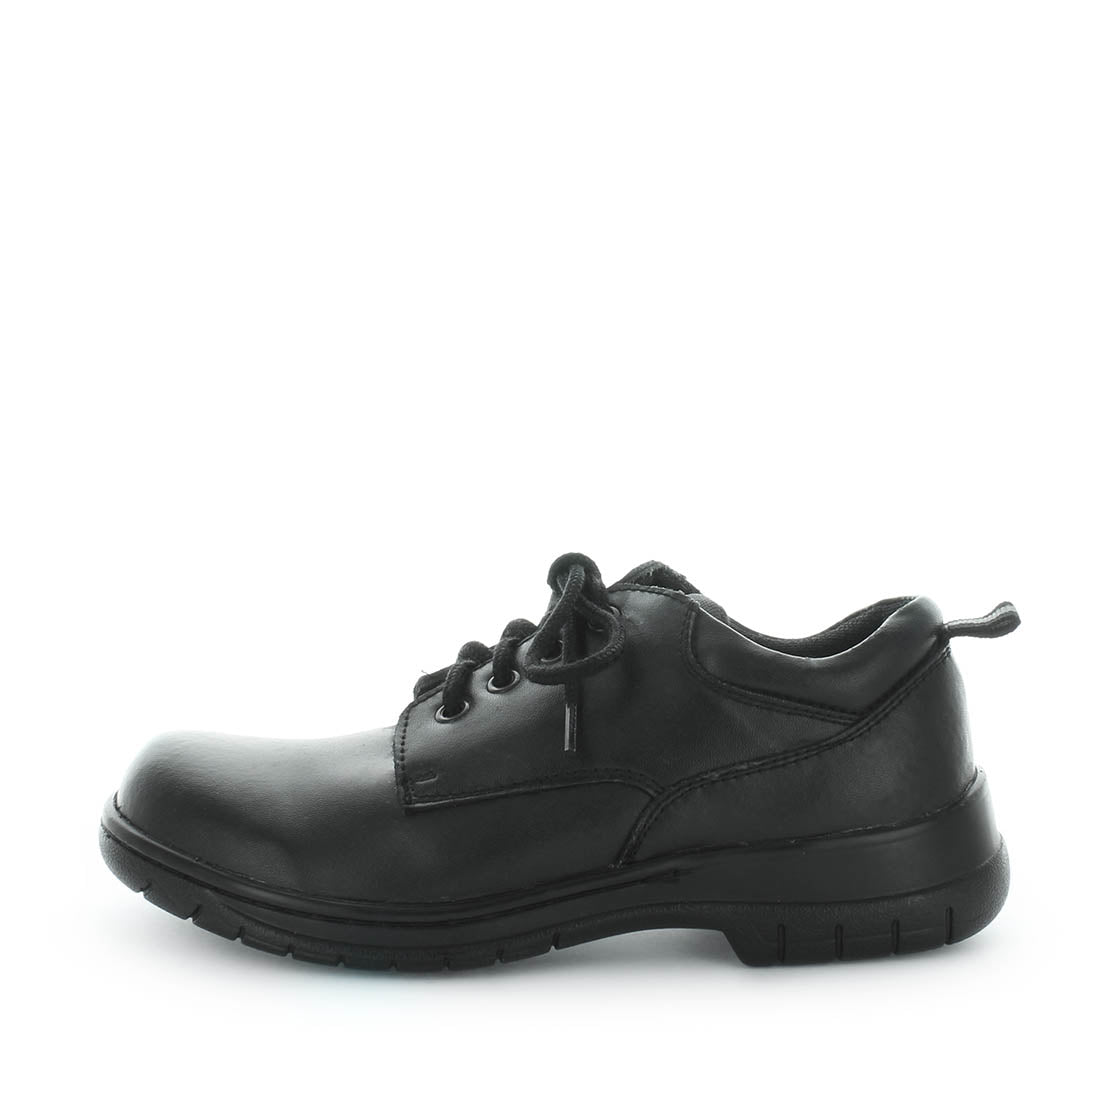 JUSTICE by WILDE SCHOOL - iShoes - School Shoes, School Shoes: Junior Boy's, School Shoes: Junior Girl's, School Shoes: Youth - FOOTWEAR-FOOTWEAR